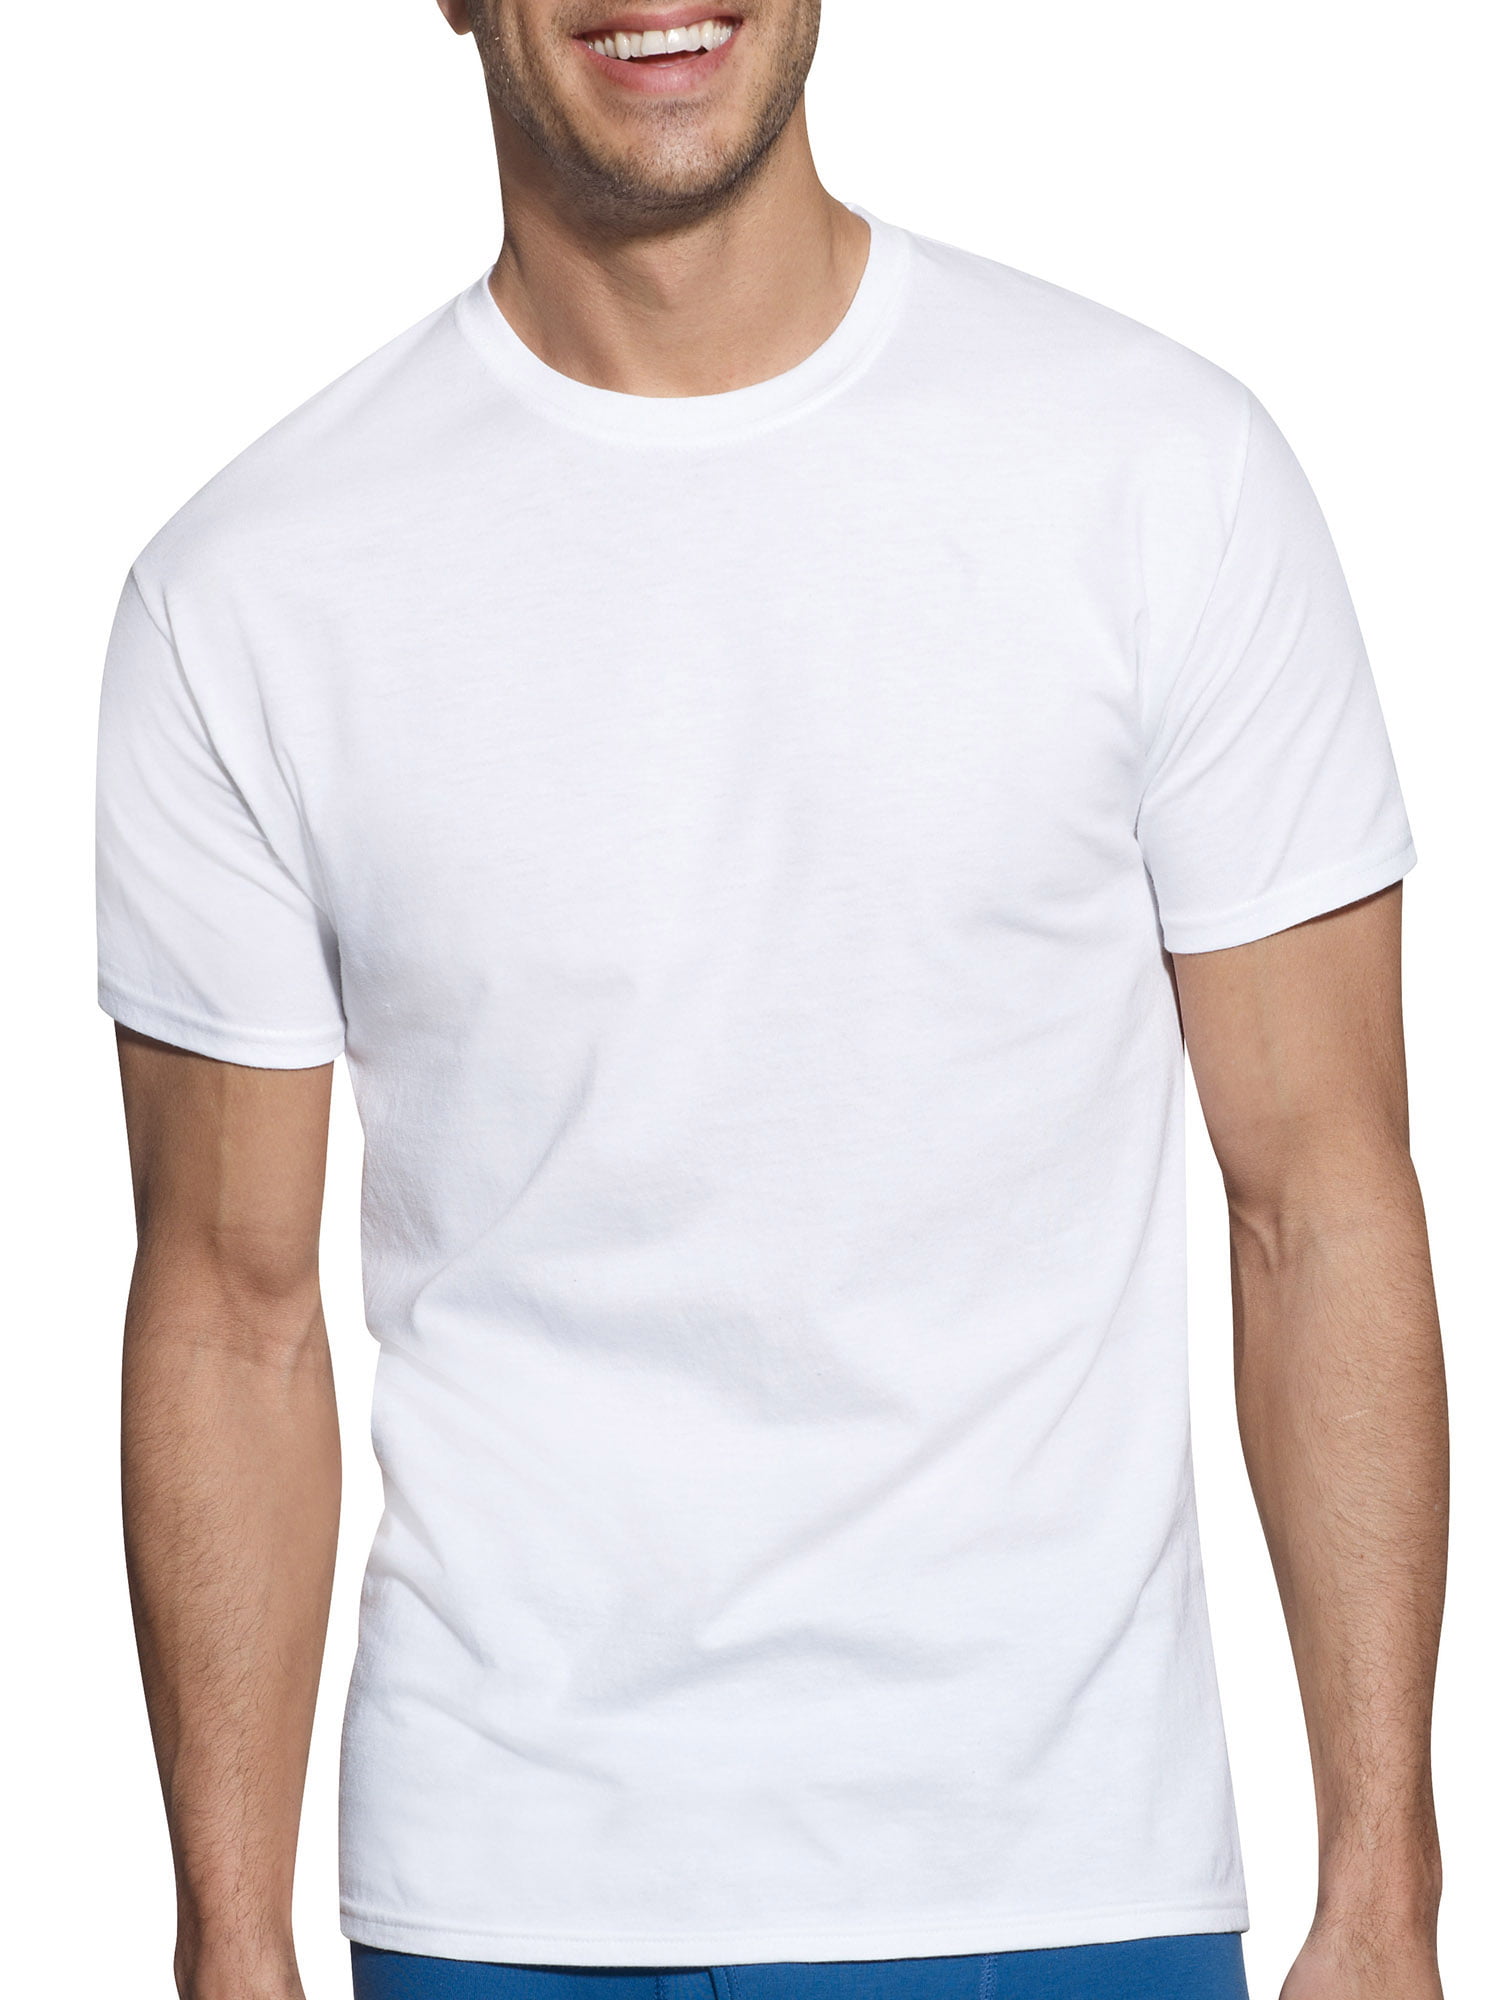 Hanes - Hanes Men's Comfortsoft Tagless T-Shirts, 6 Pack - Walmart.com ...